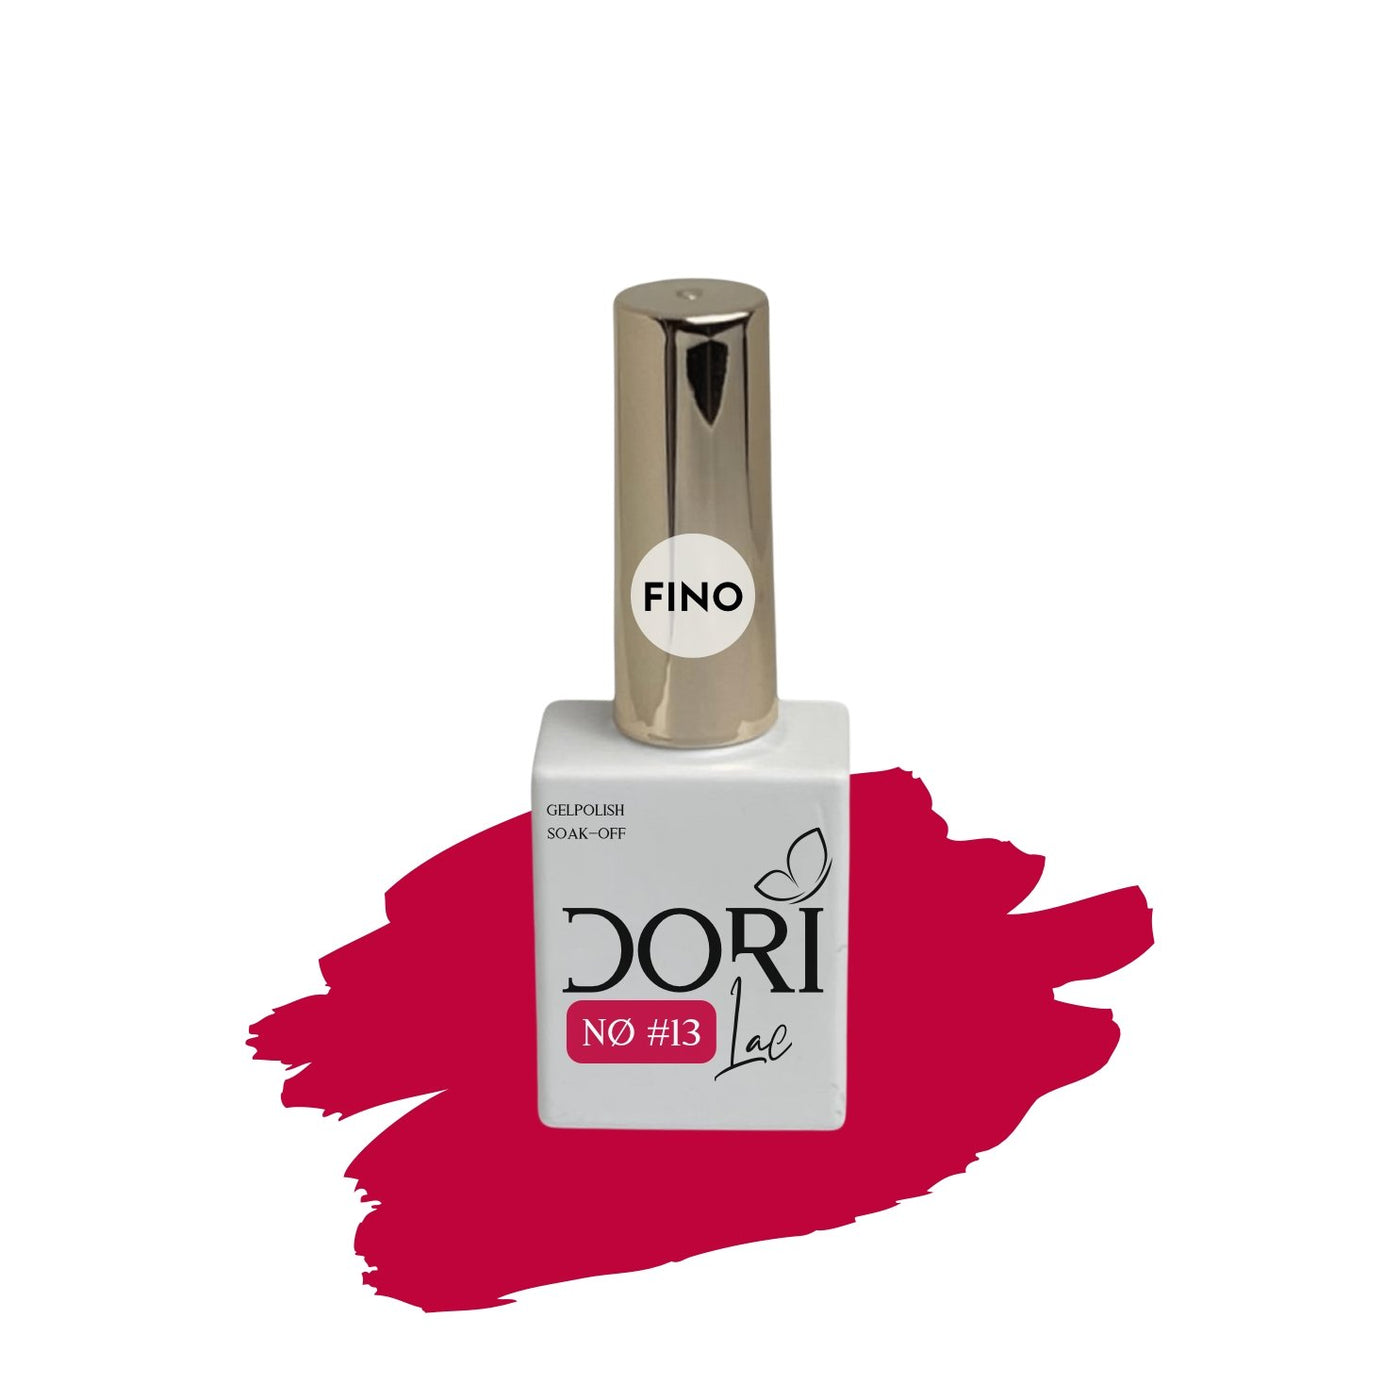 Doriana Cosmetics DORILac *FINO* - N⦰13 (Soak Off) - Doriana Cosmetics GmbH